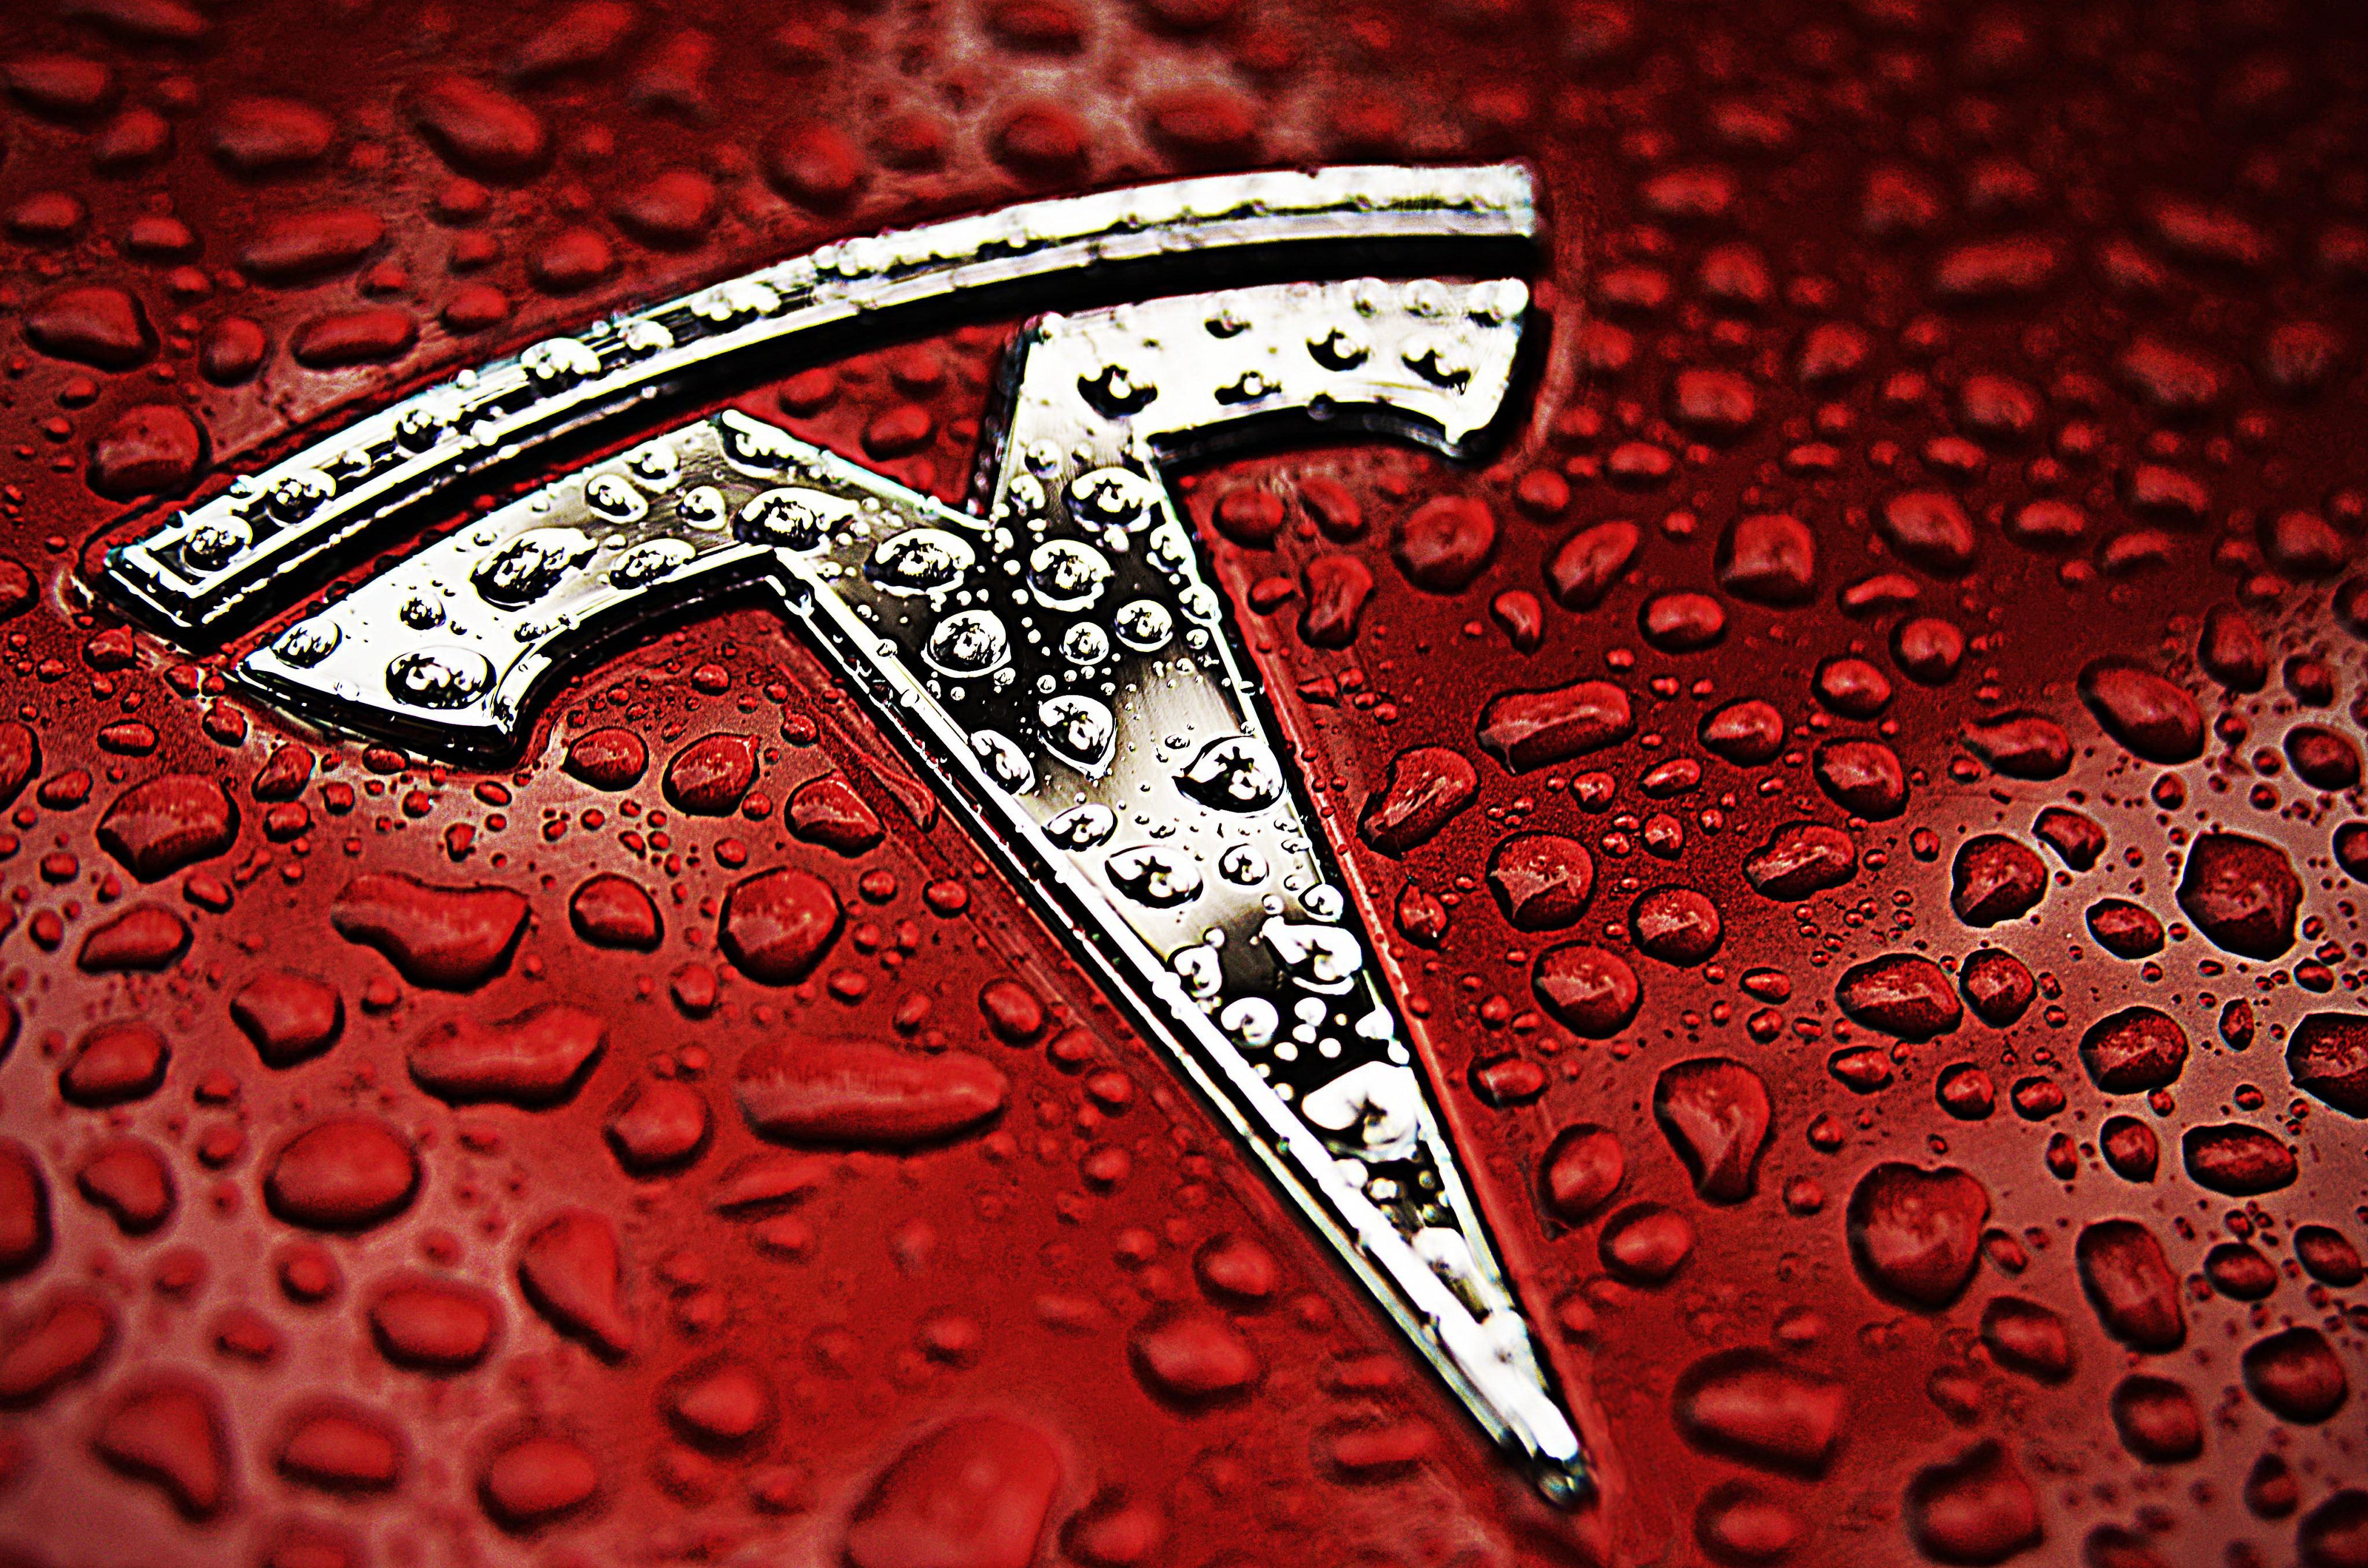 Logo de Tesla